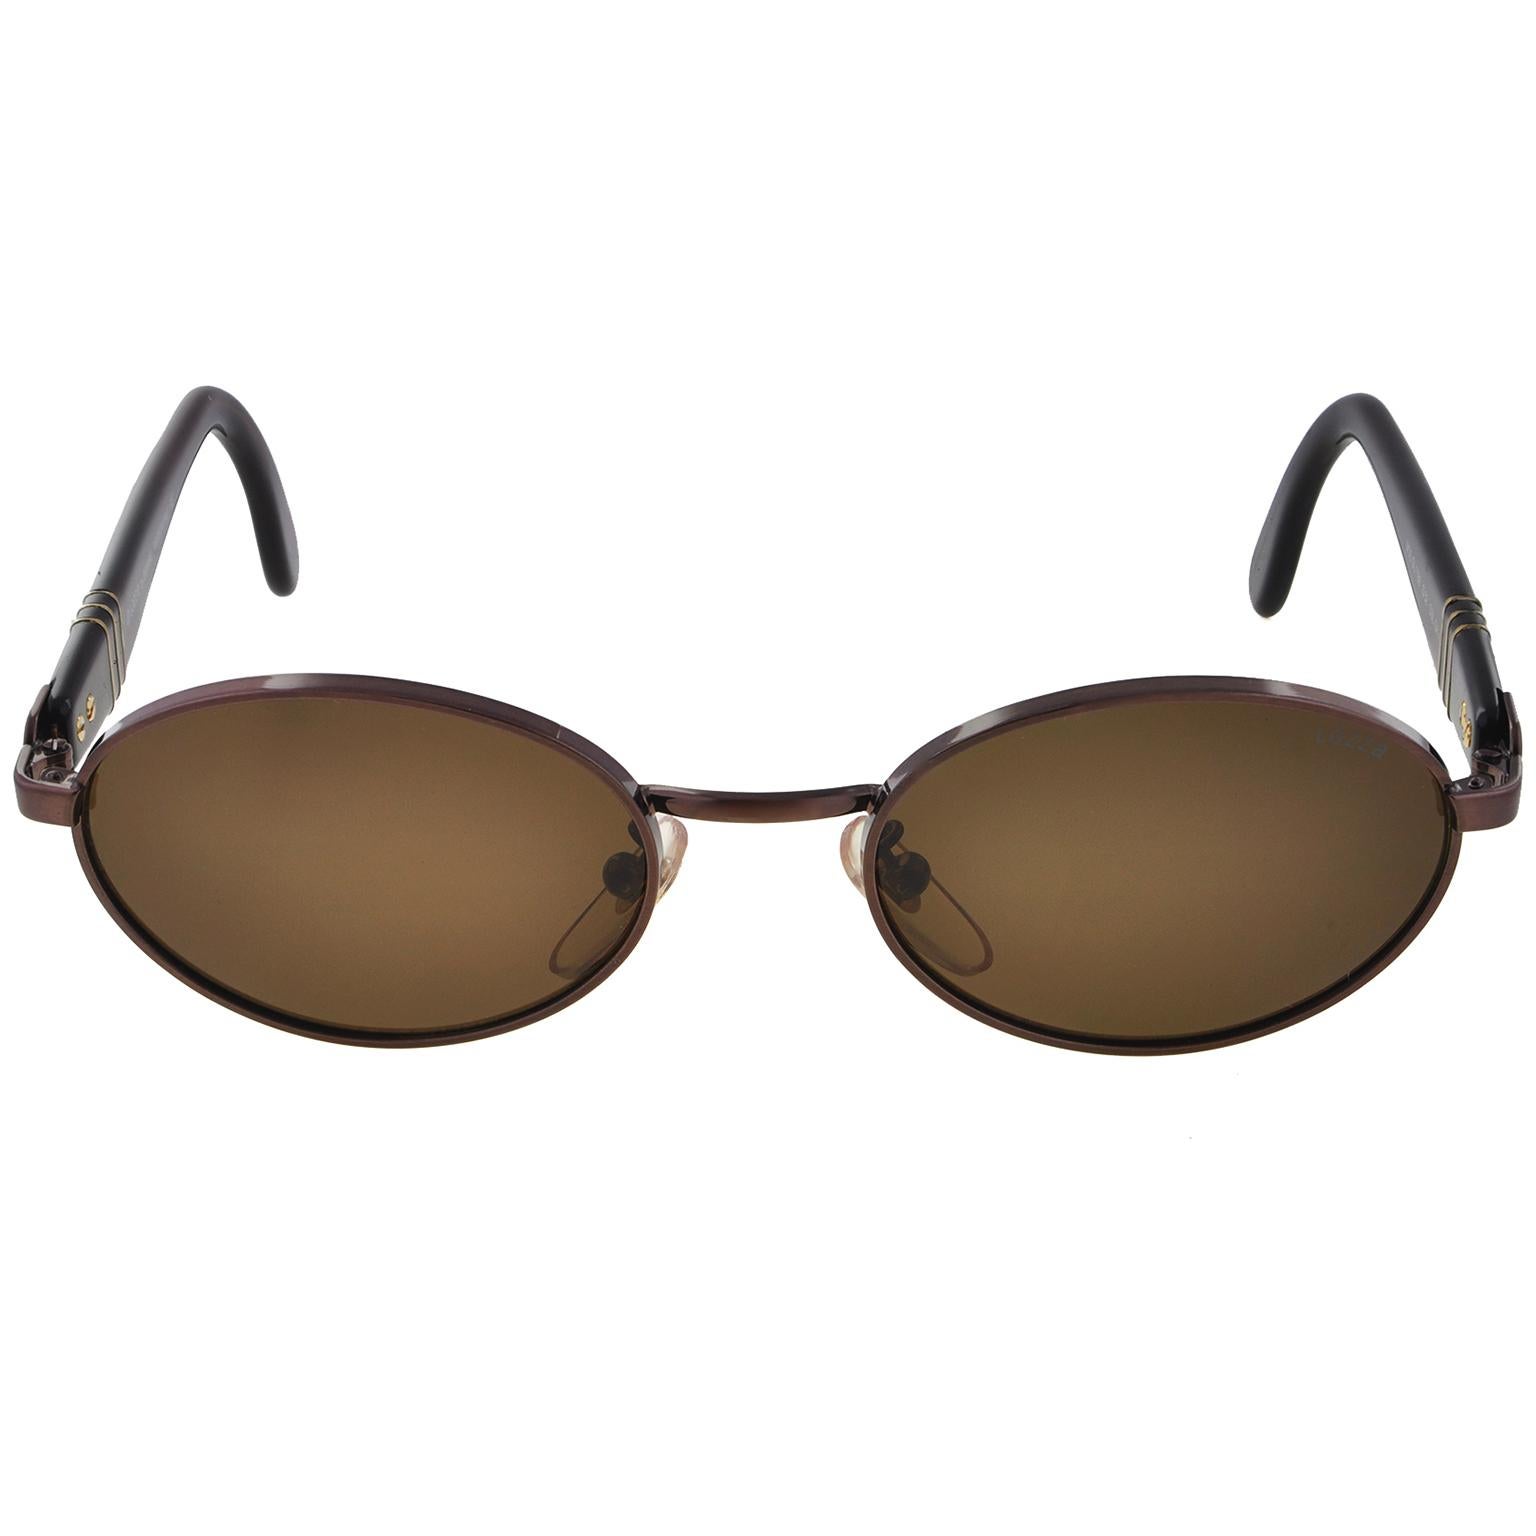 Brown Italian vintage sunglasses by Lozza, 80s designer oval sunglasses [never worn] For Sale